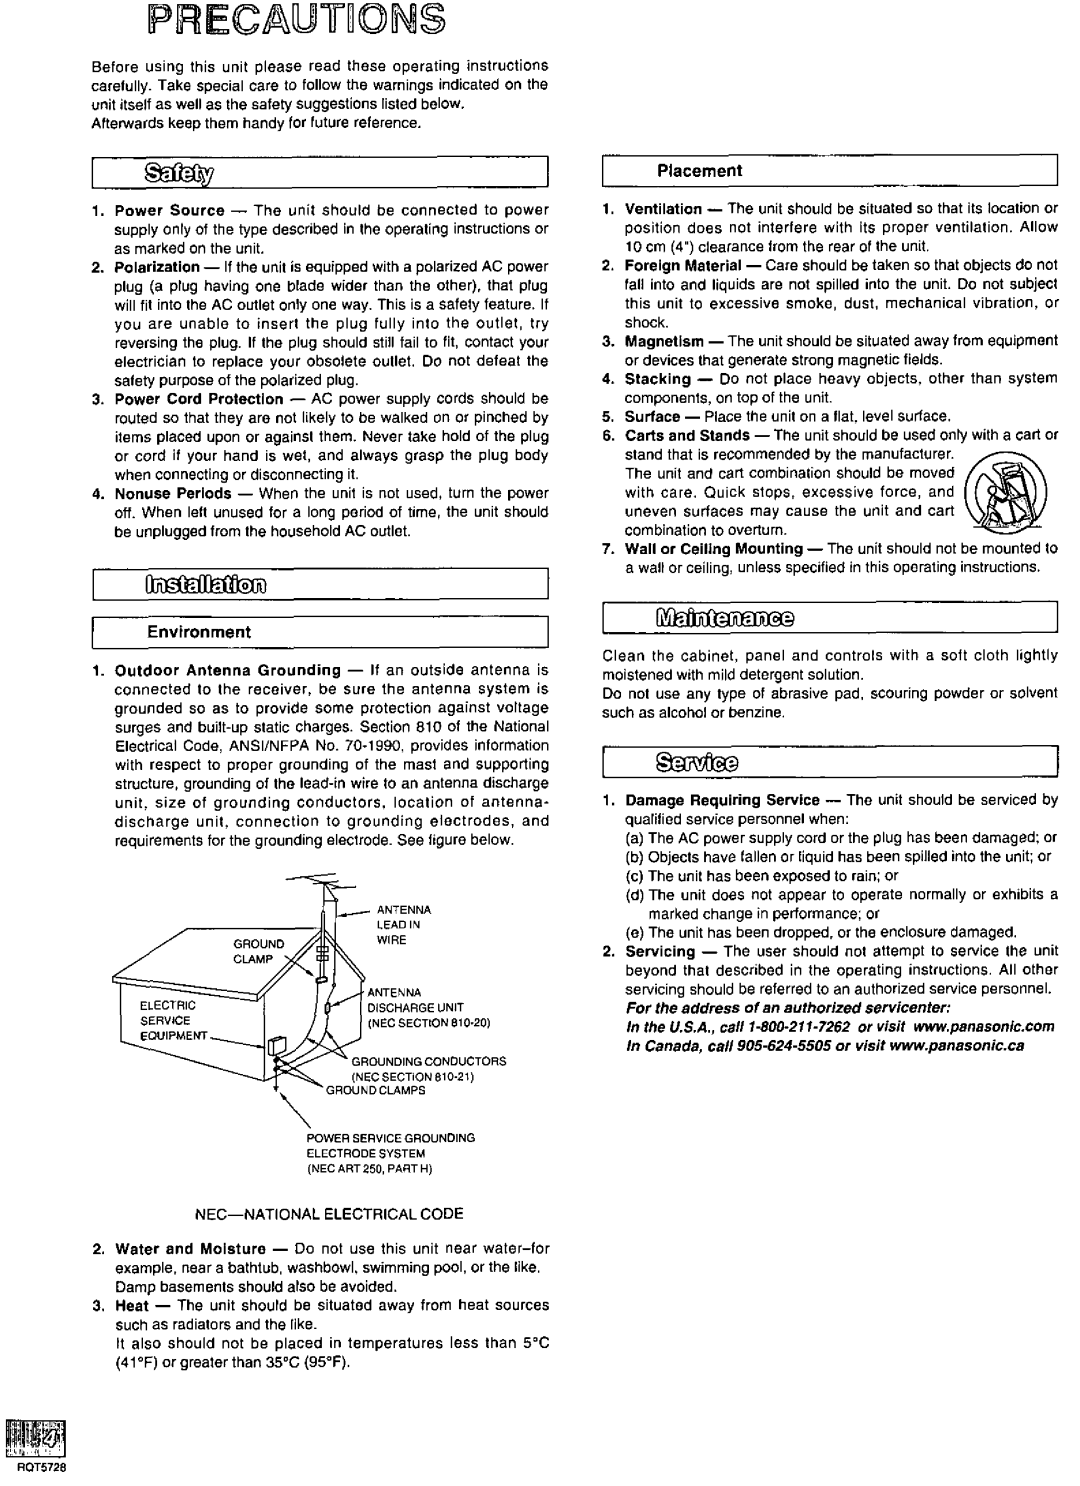 Technics SA-DX750 manual 